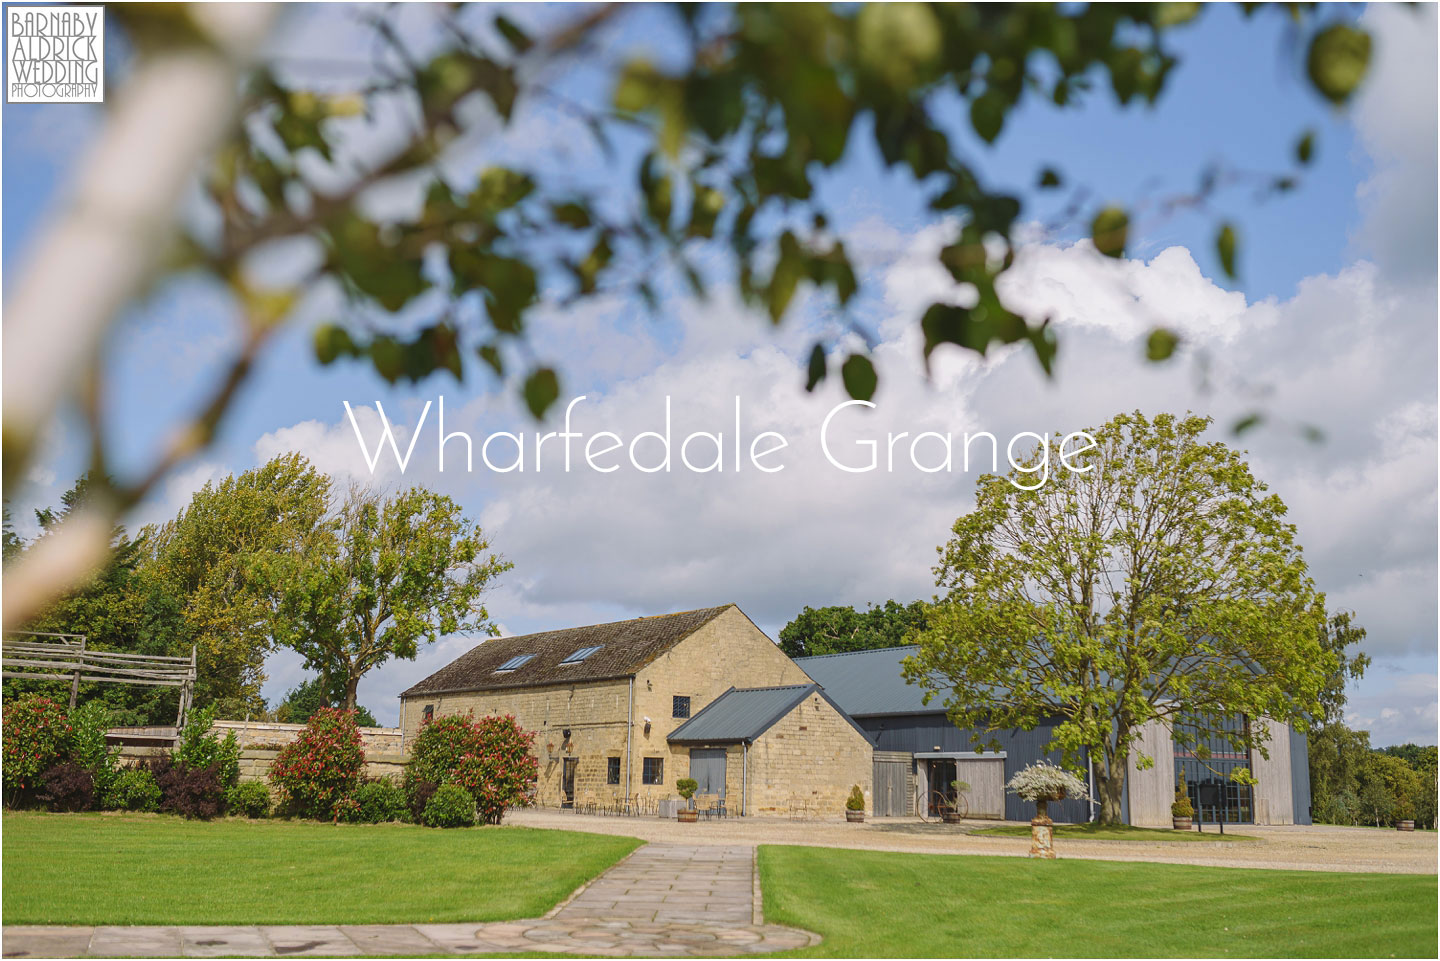 Wharfedale Grange, Wharfedale Grange Yorkshire. Wharfedale Grange Yorkshire Wedding Barn Venue, Best Yorkshire Wedding Barn Venues, Best Yorkshire Wedding Barns, Yorkshire Barn Venues